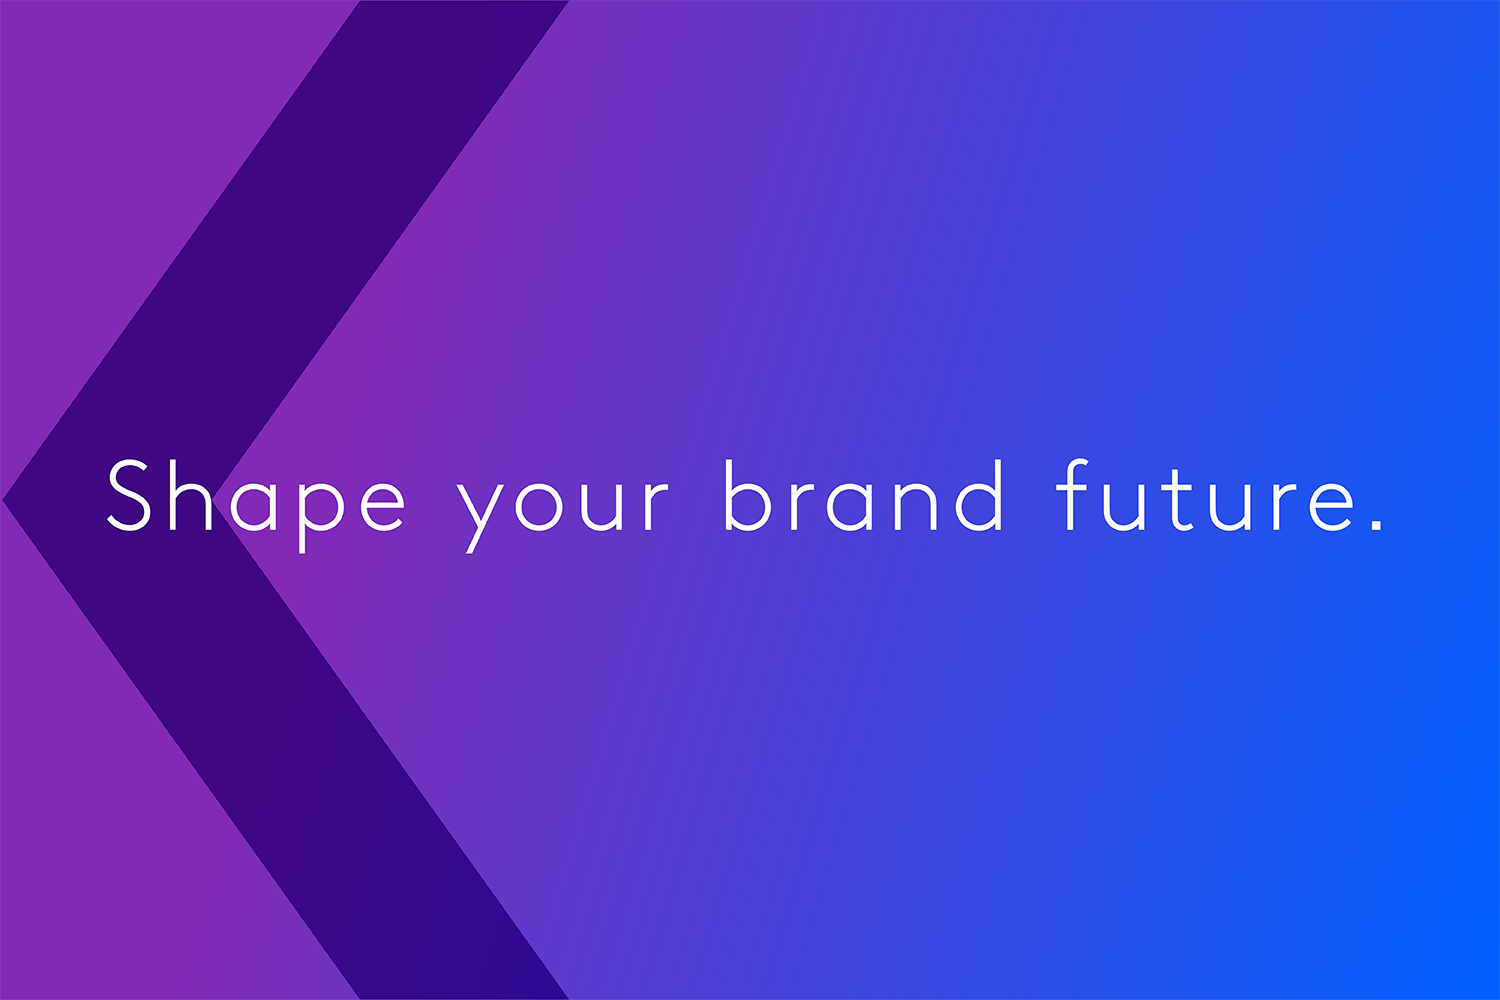 Shape your brand future.